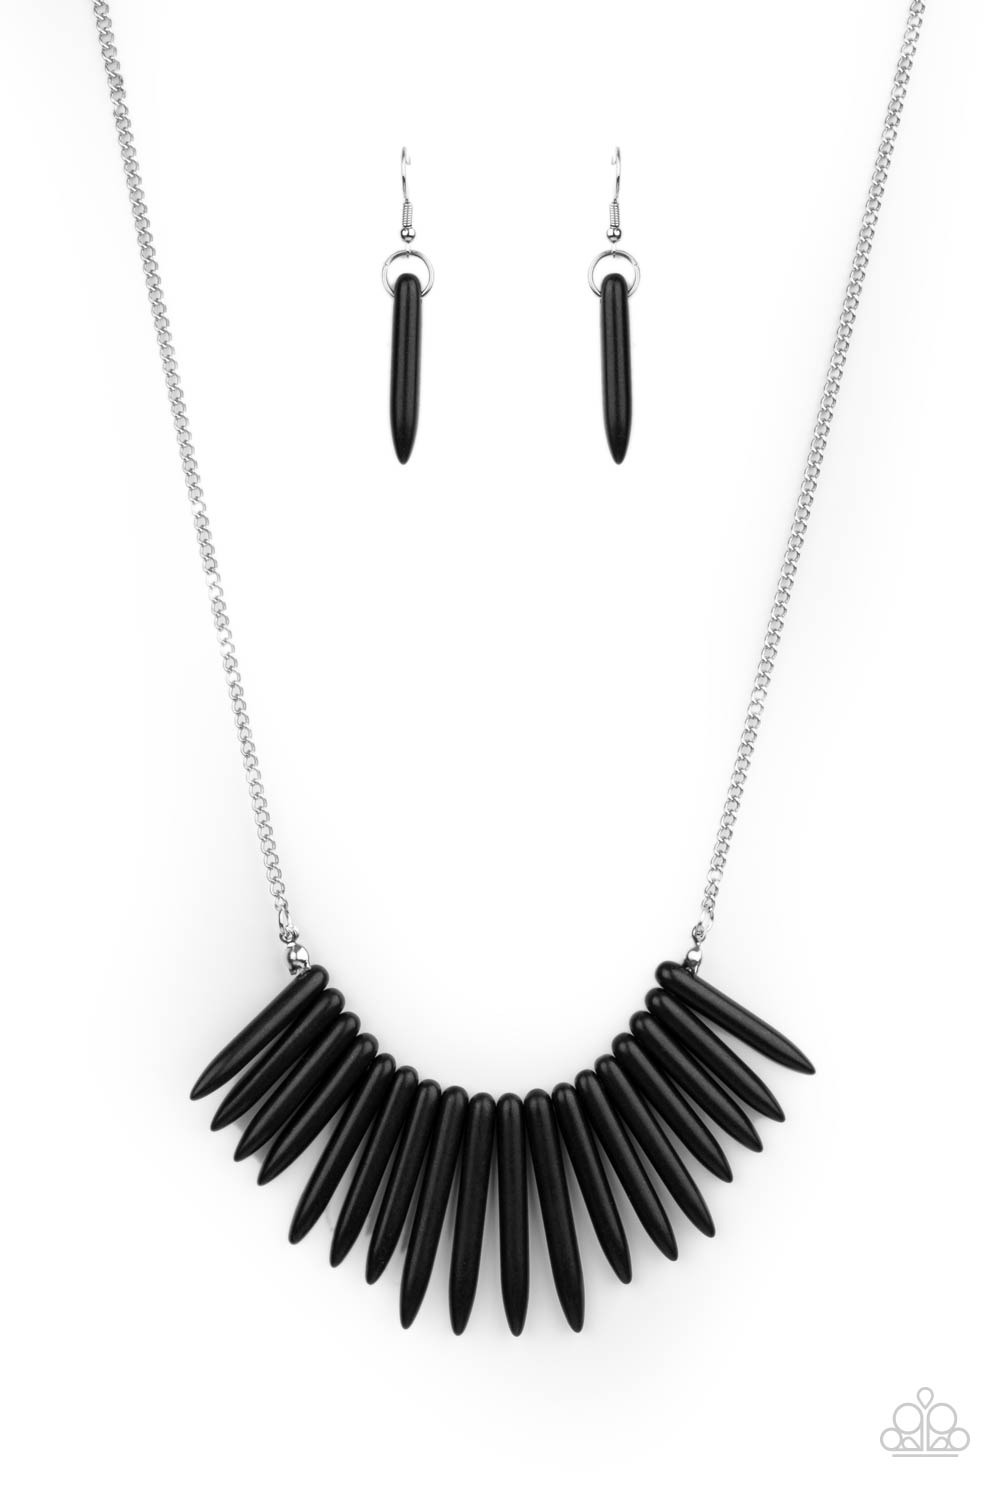 Paparazzi Accessories Exotic Edge - Black Necklaces - Lady T Accessories